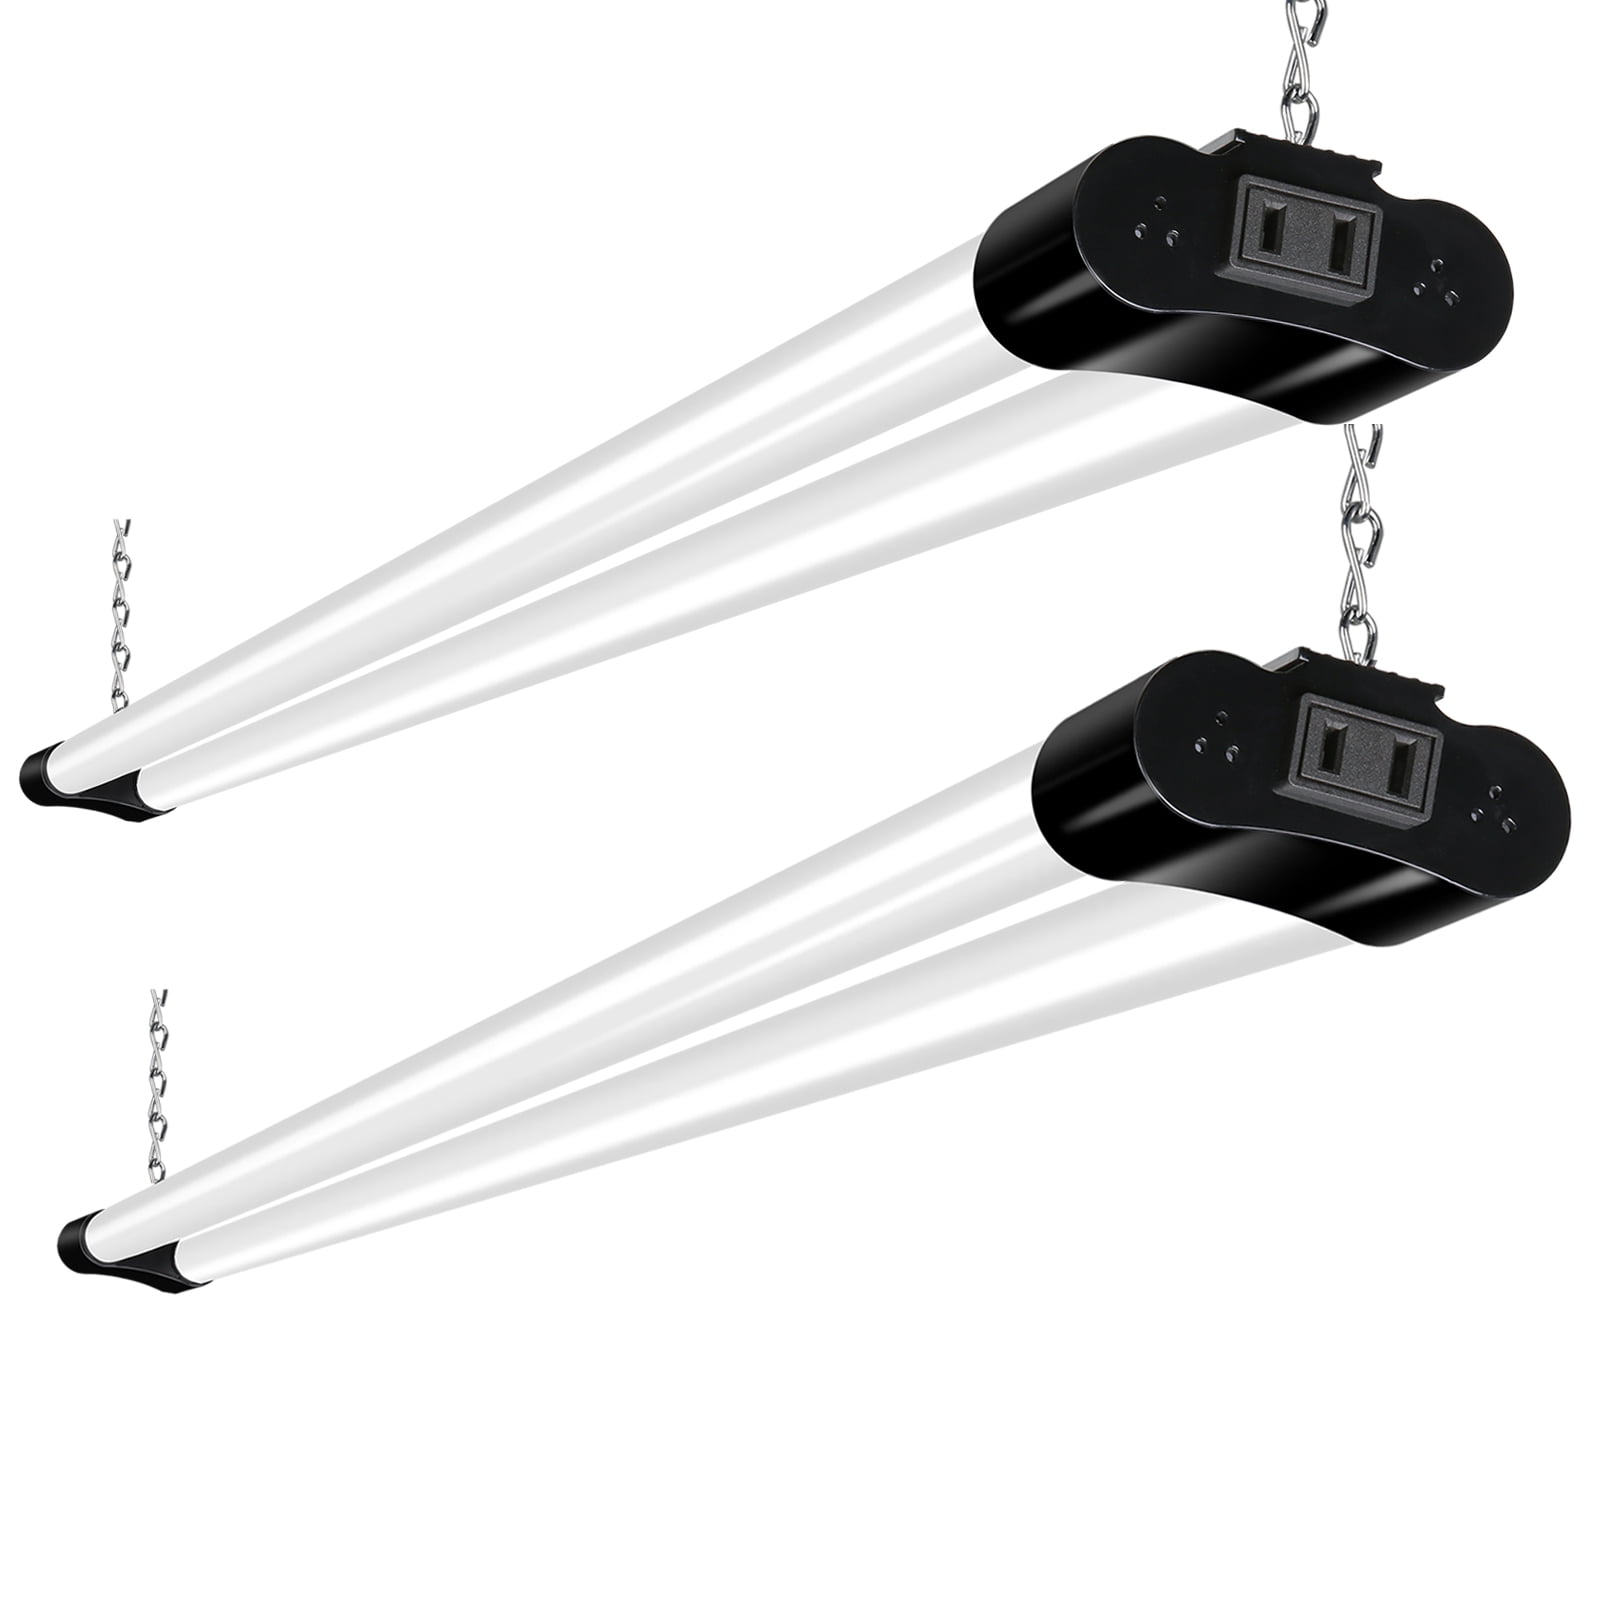 4 FT LED Shop Light 5000K Utility Garage Ceiling Light Hanging Fixture Daylight 